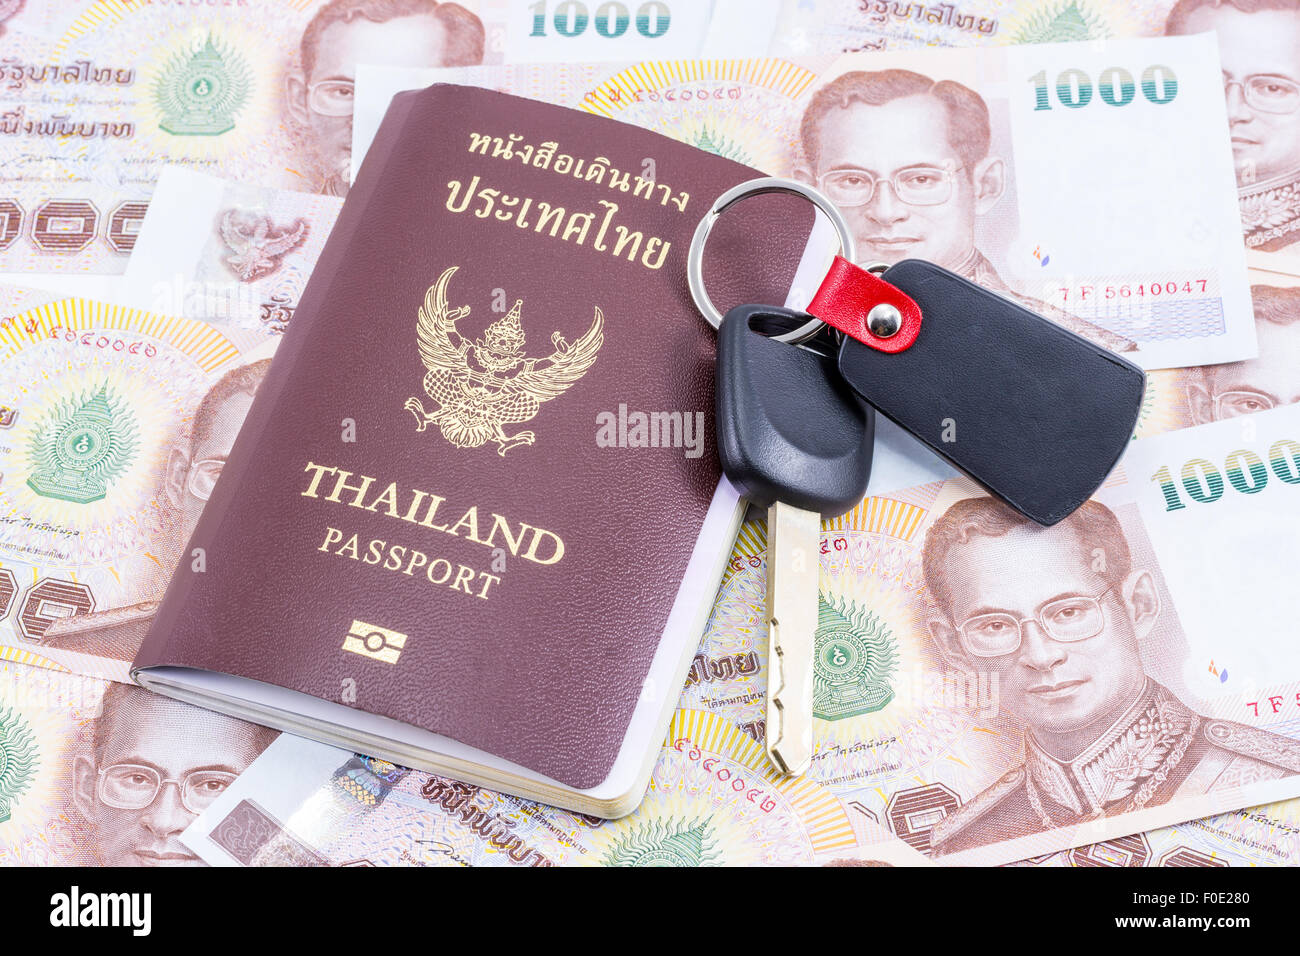 Thai Money 1000 Bath with passport and a car key Stock Photo